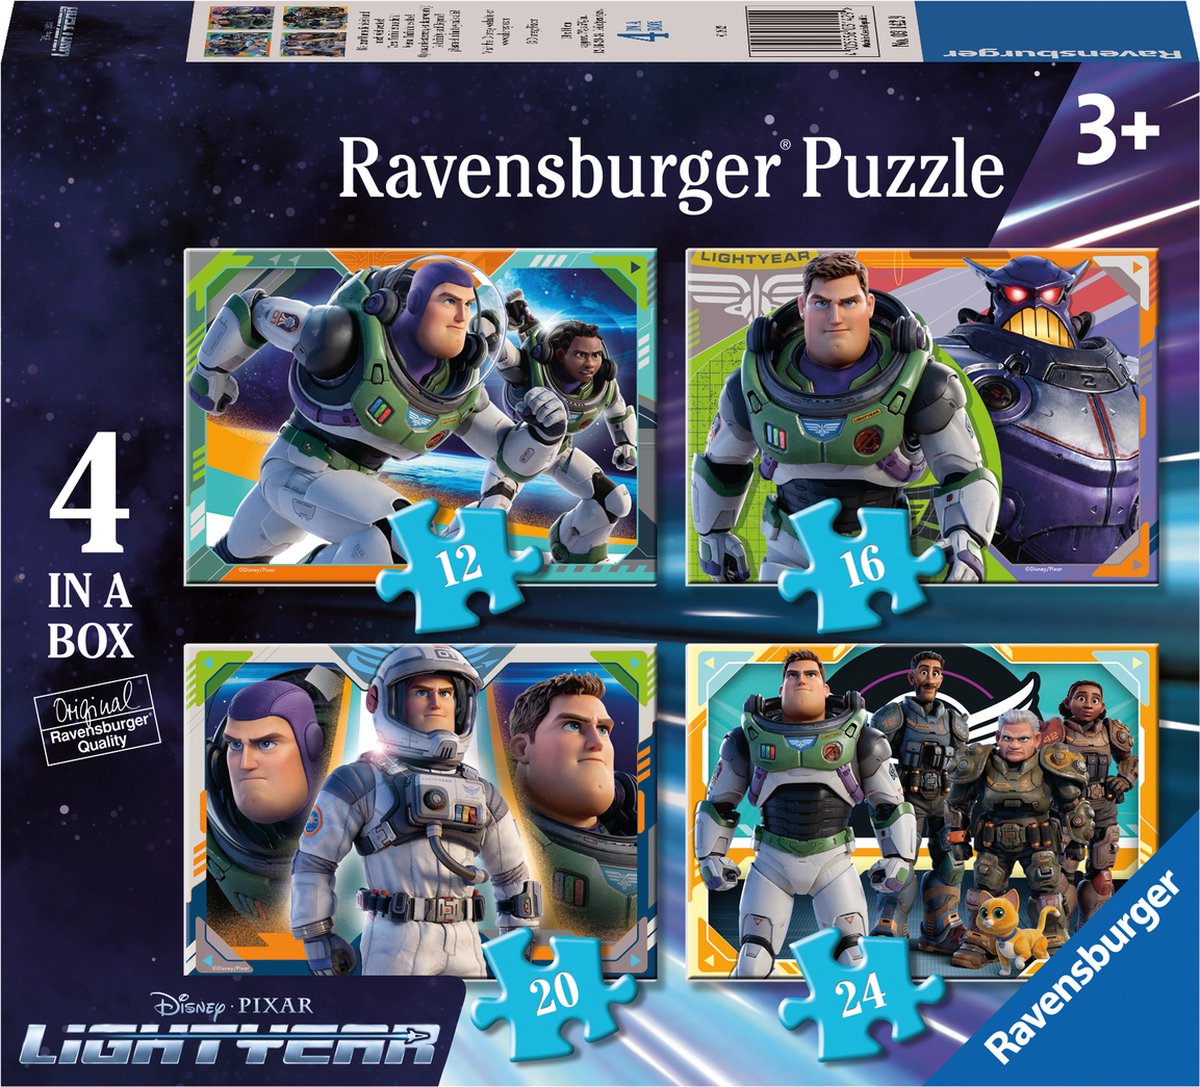   Disney Lightyear 4in1box puzzel - 12+16+20+24 stukjes - kinderpuzzel